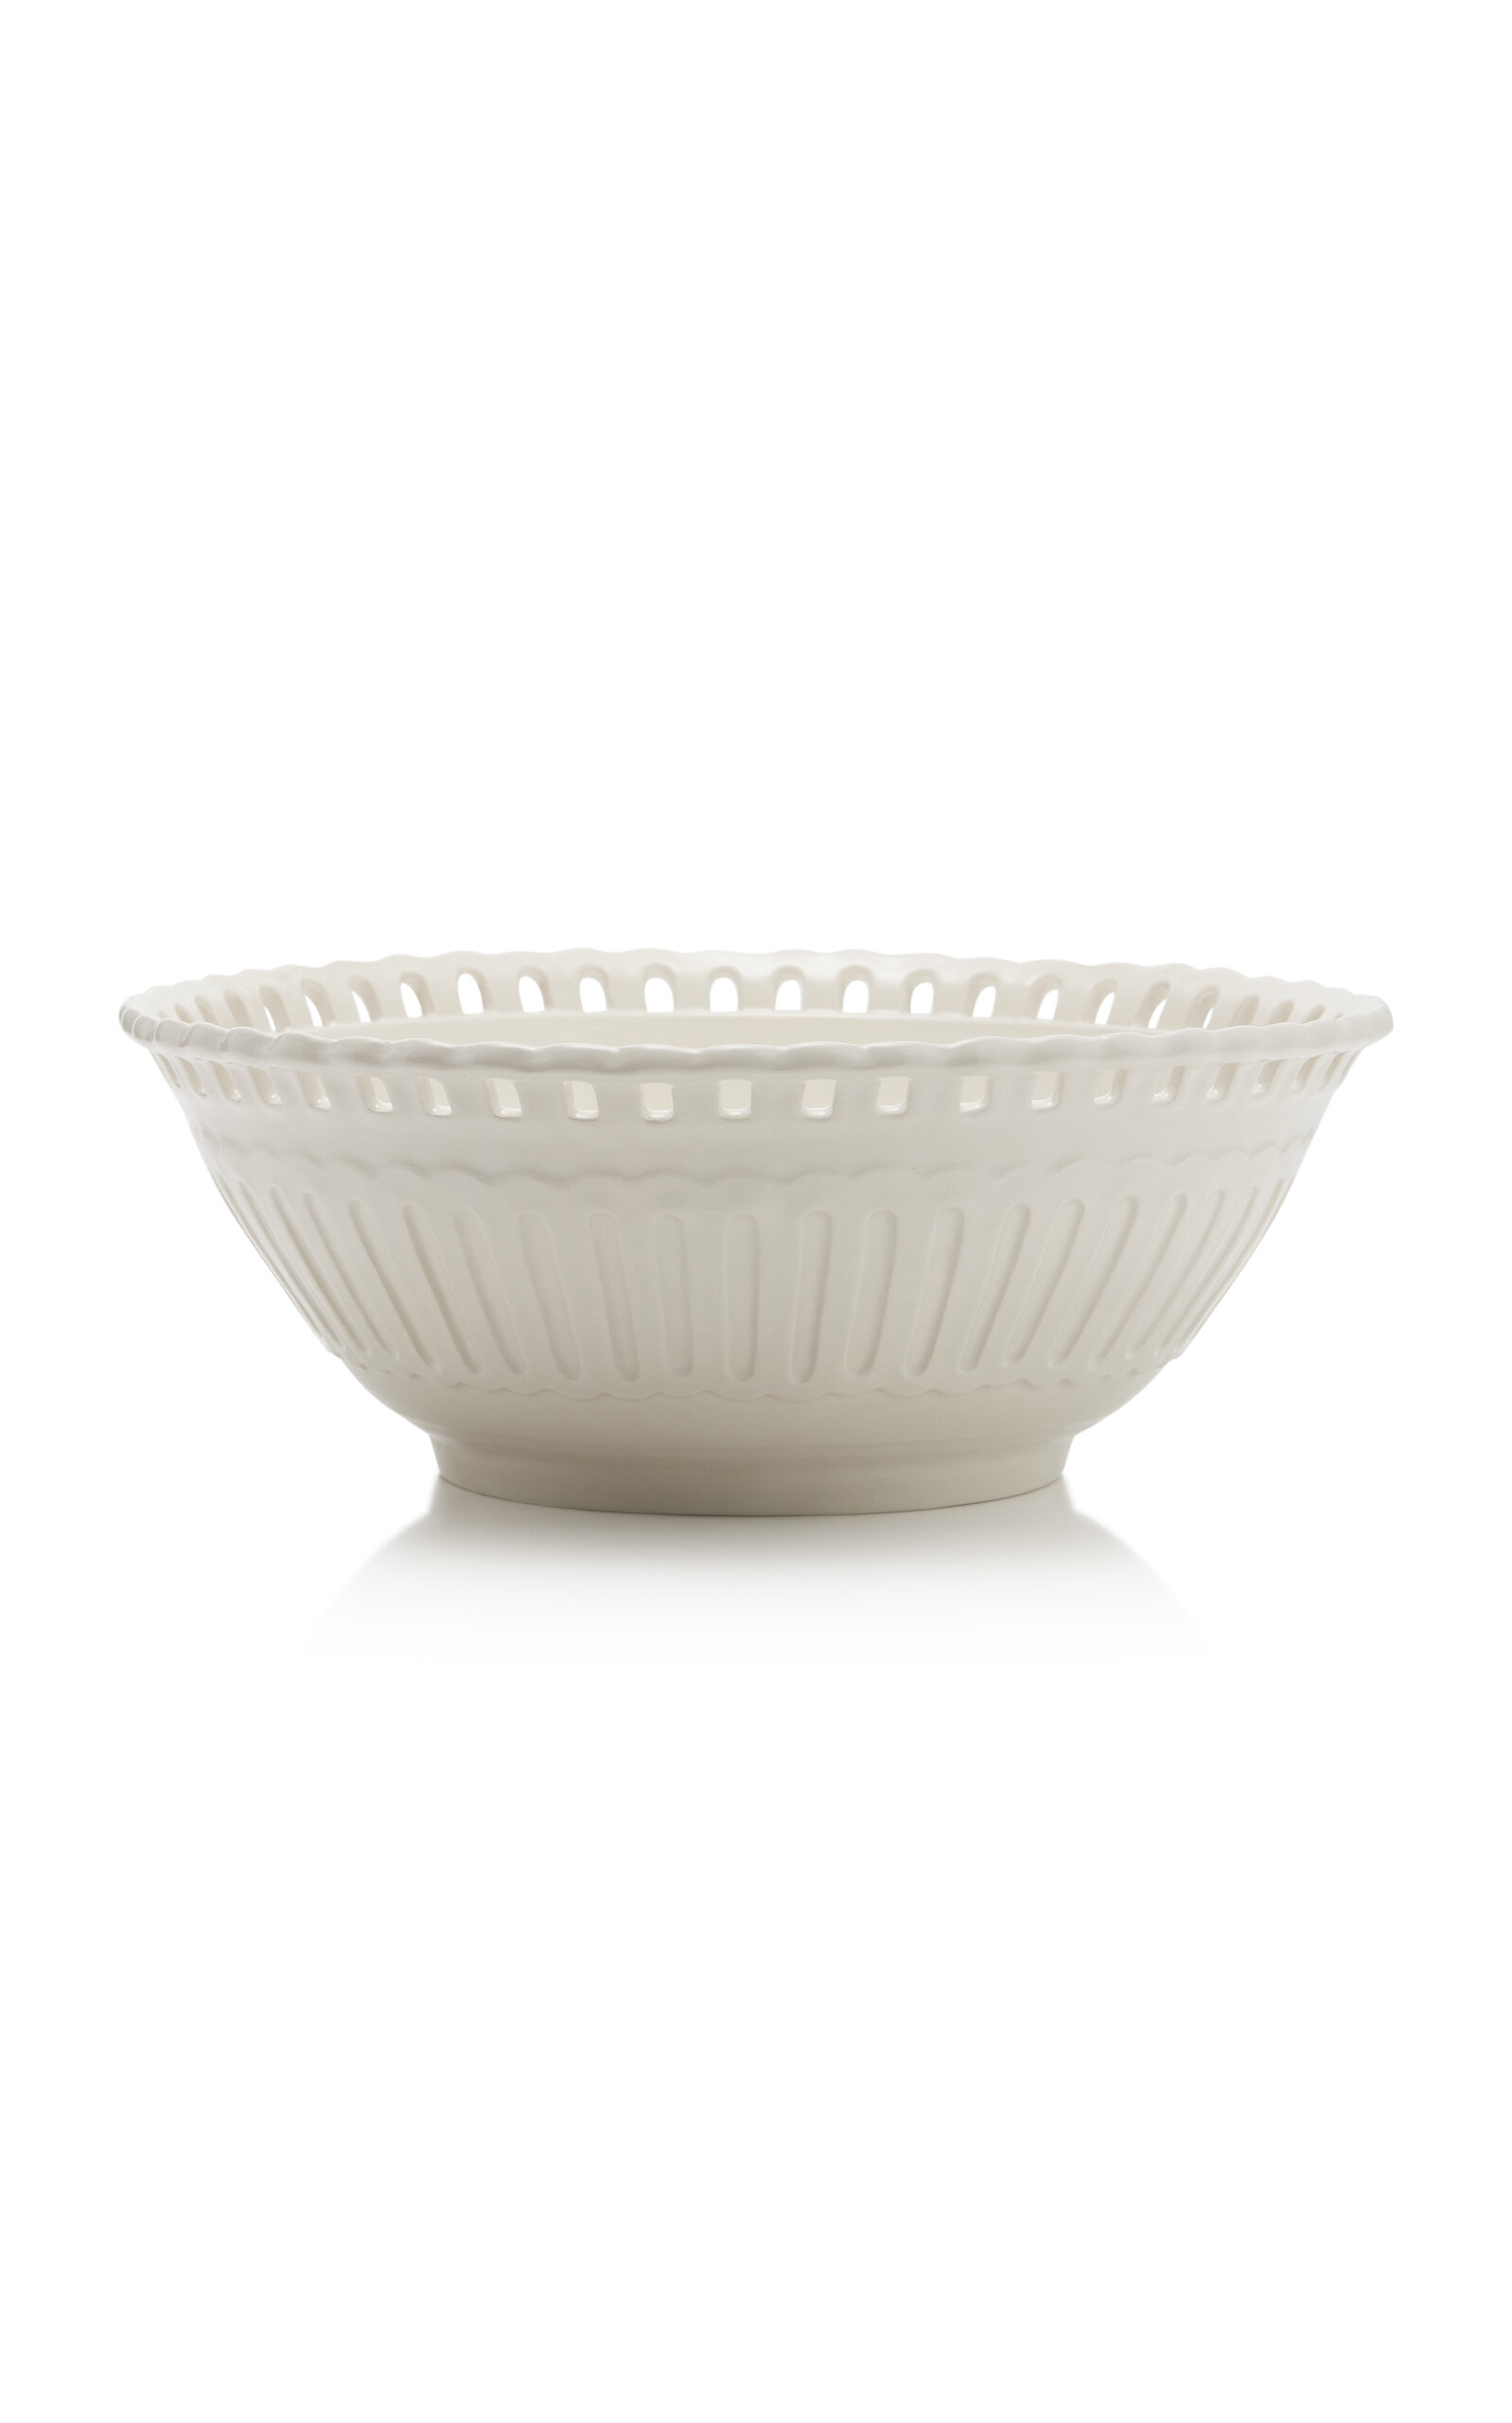 Moda Domus Large Balconata Creamware Salad Bowl In White